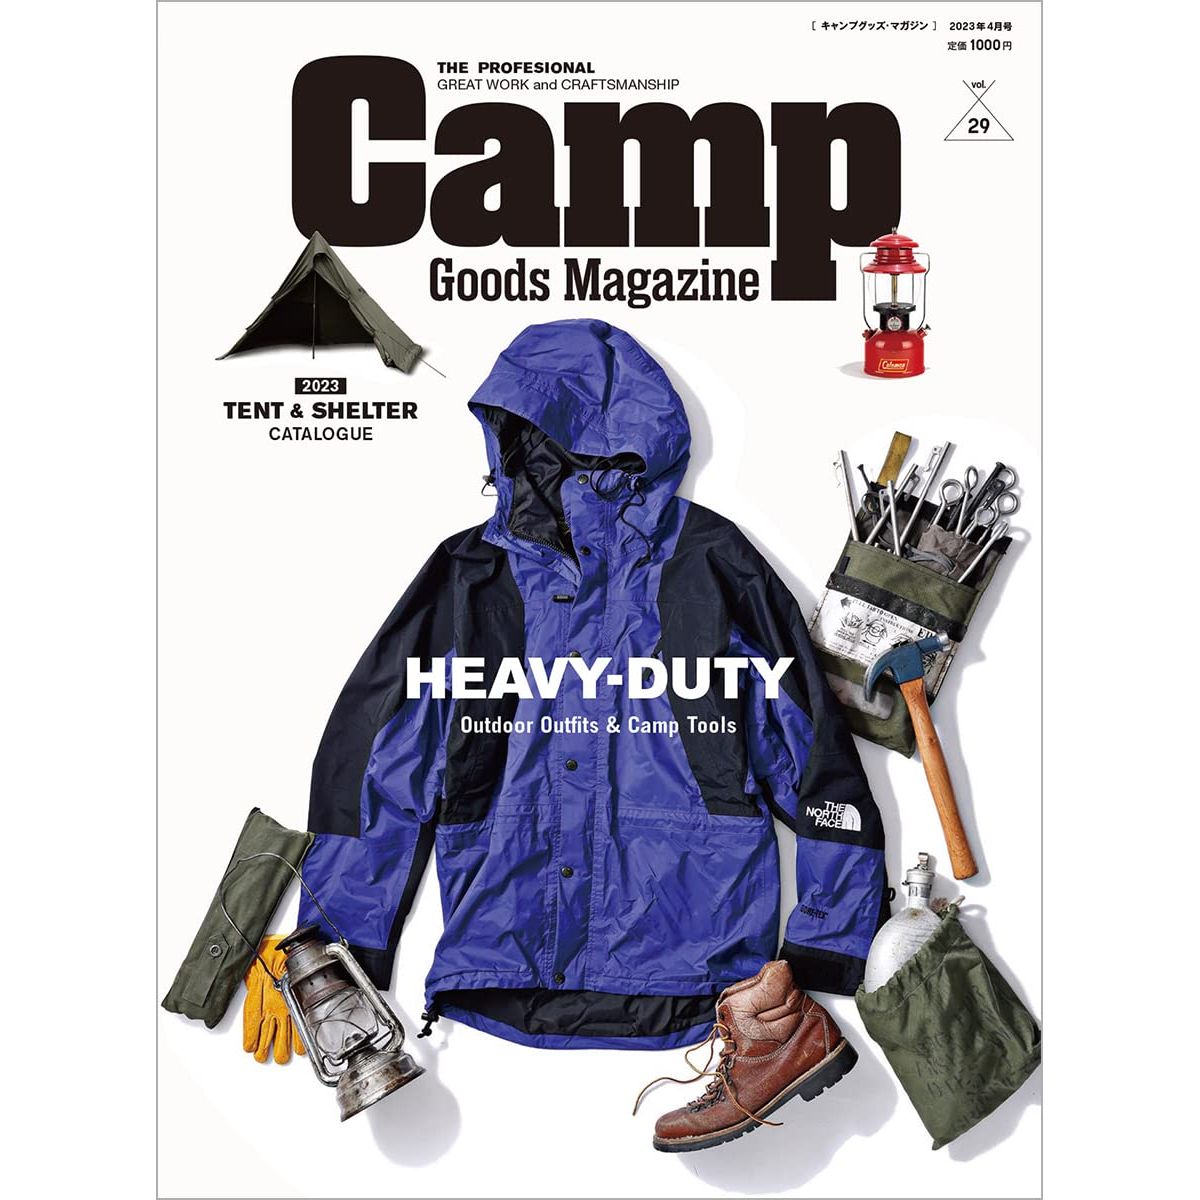 Camp Goods Magazine Vol.29